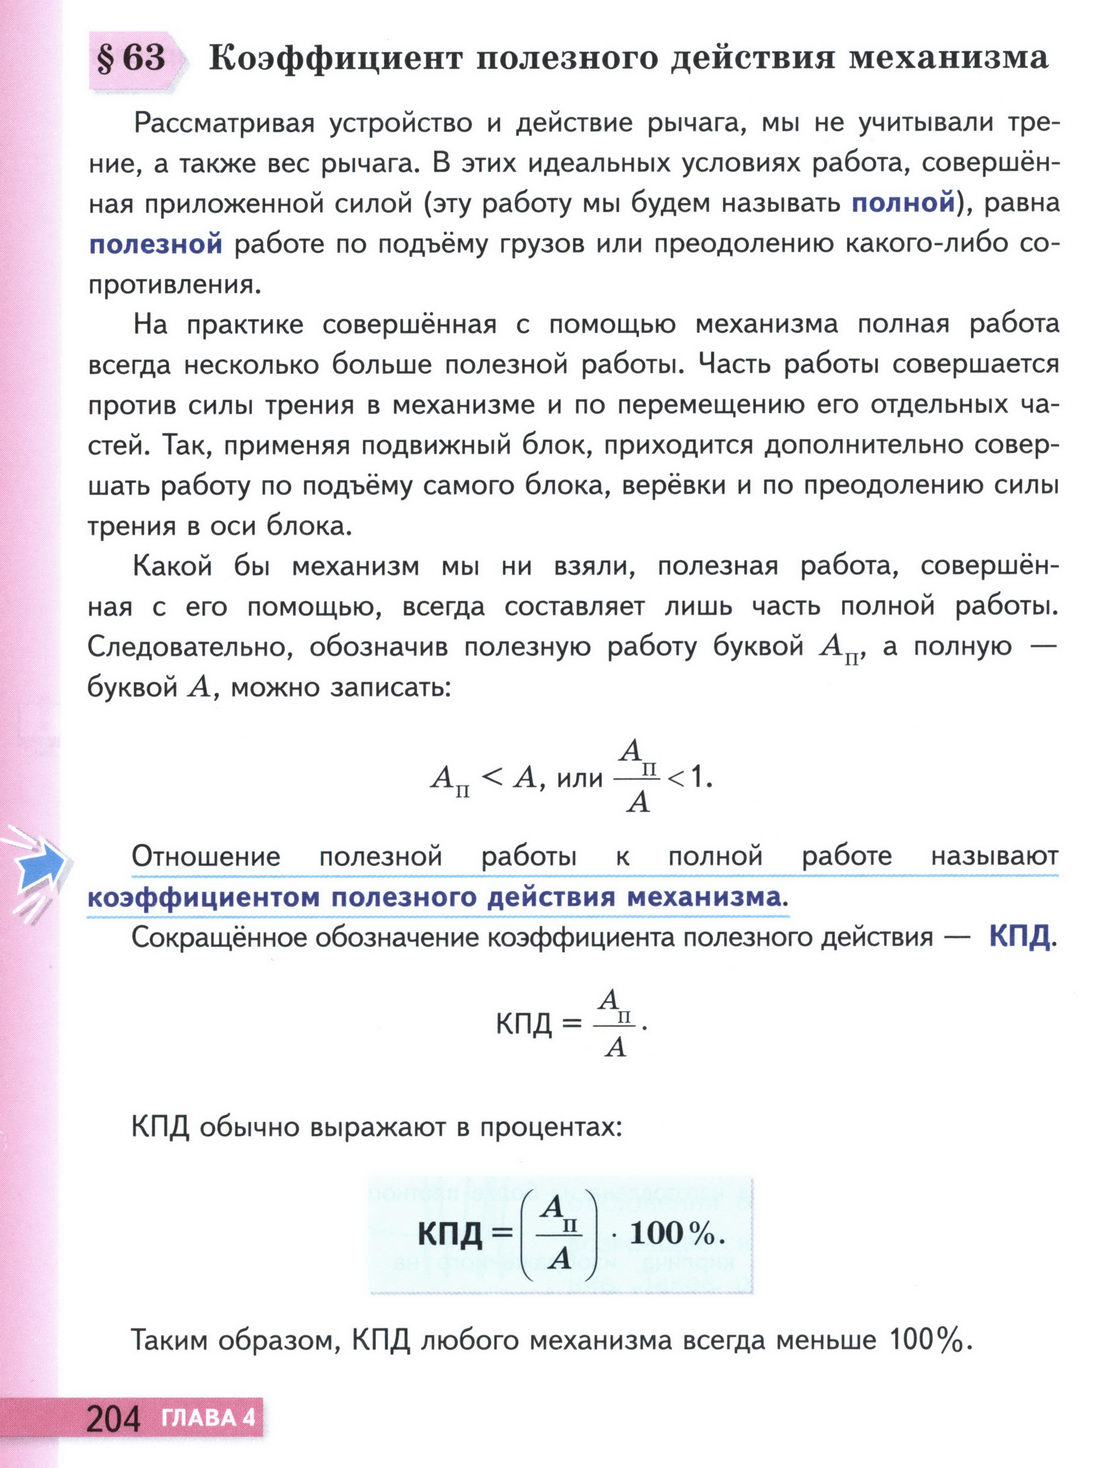 стр 204 учебник физики 7 класс параграф 63